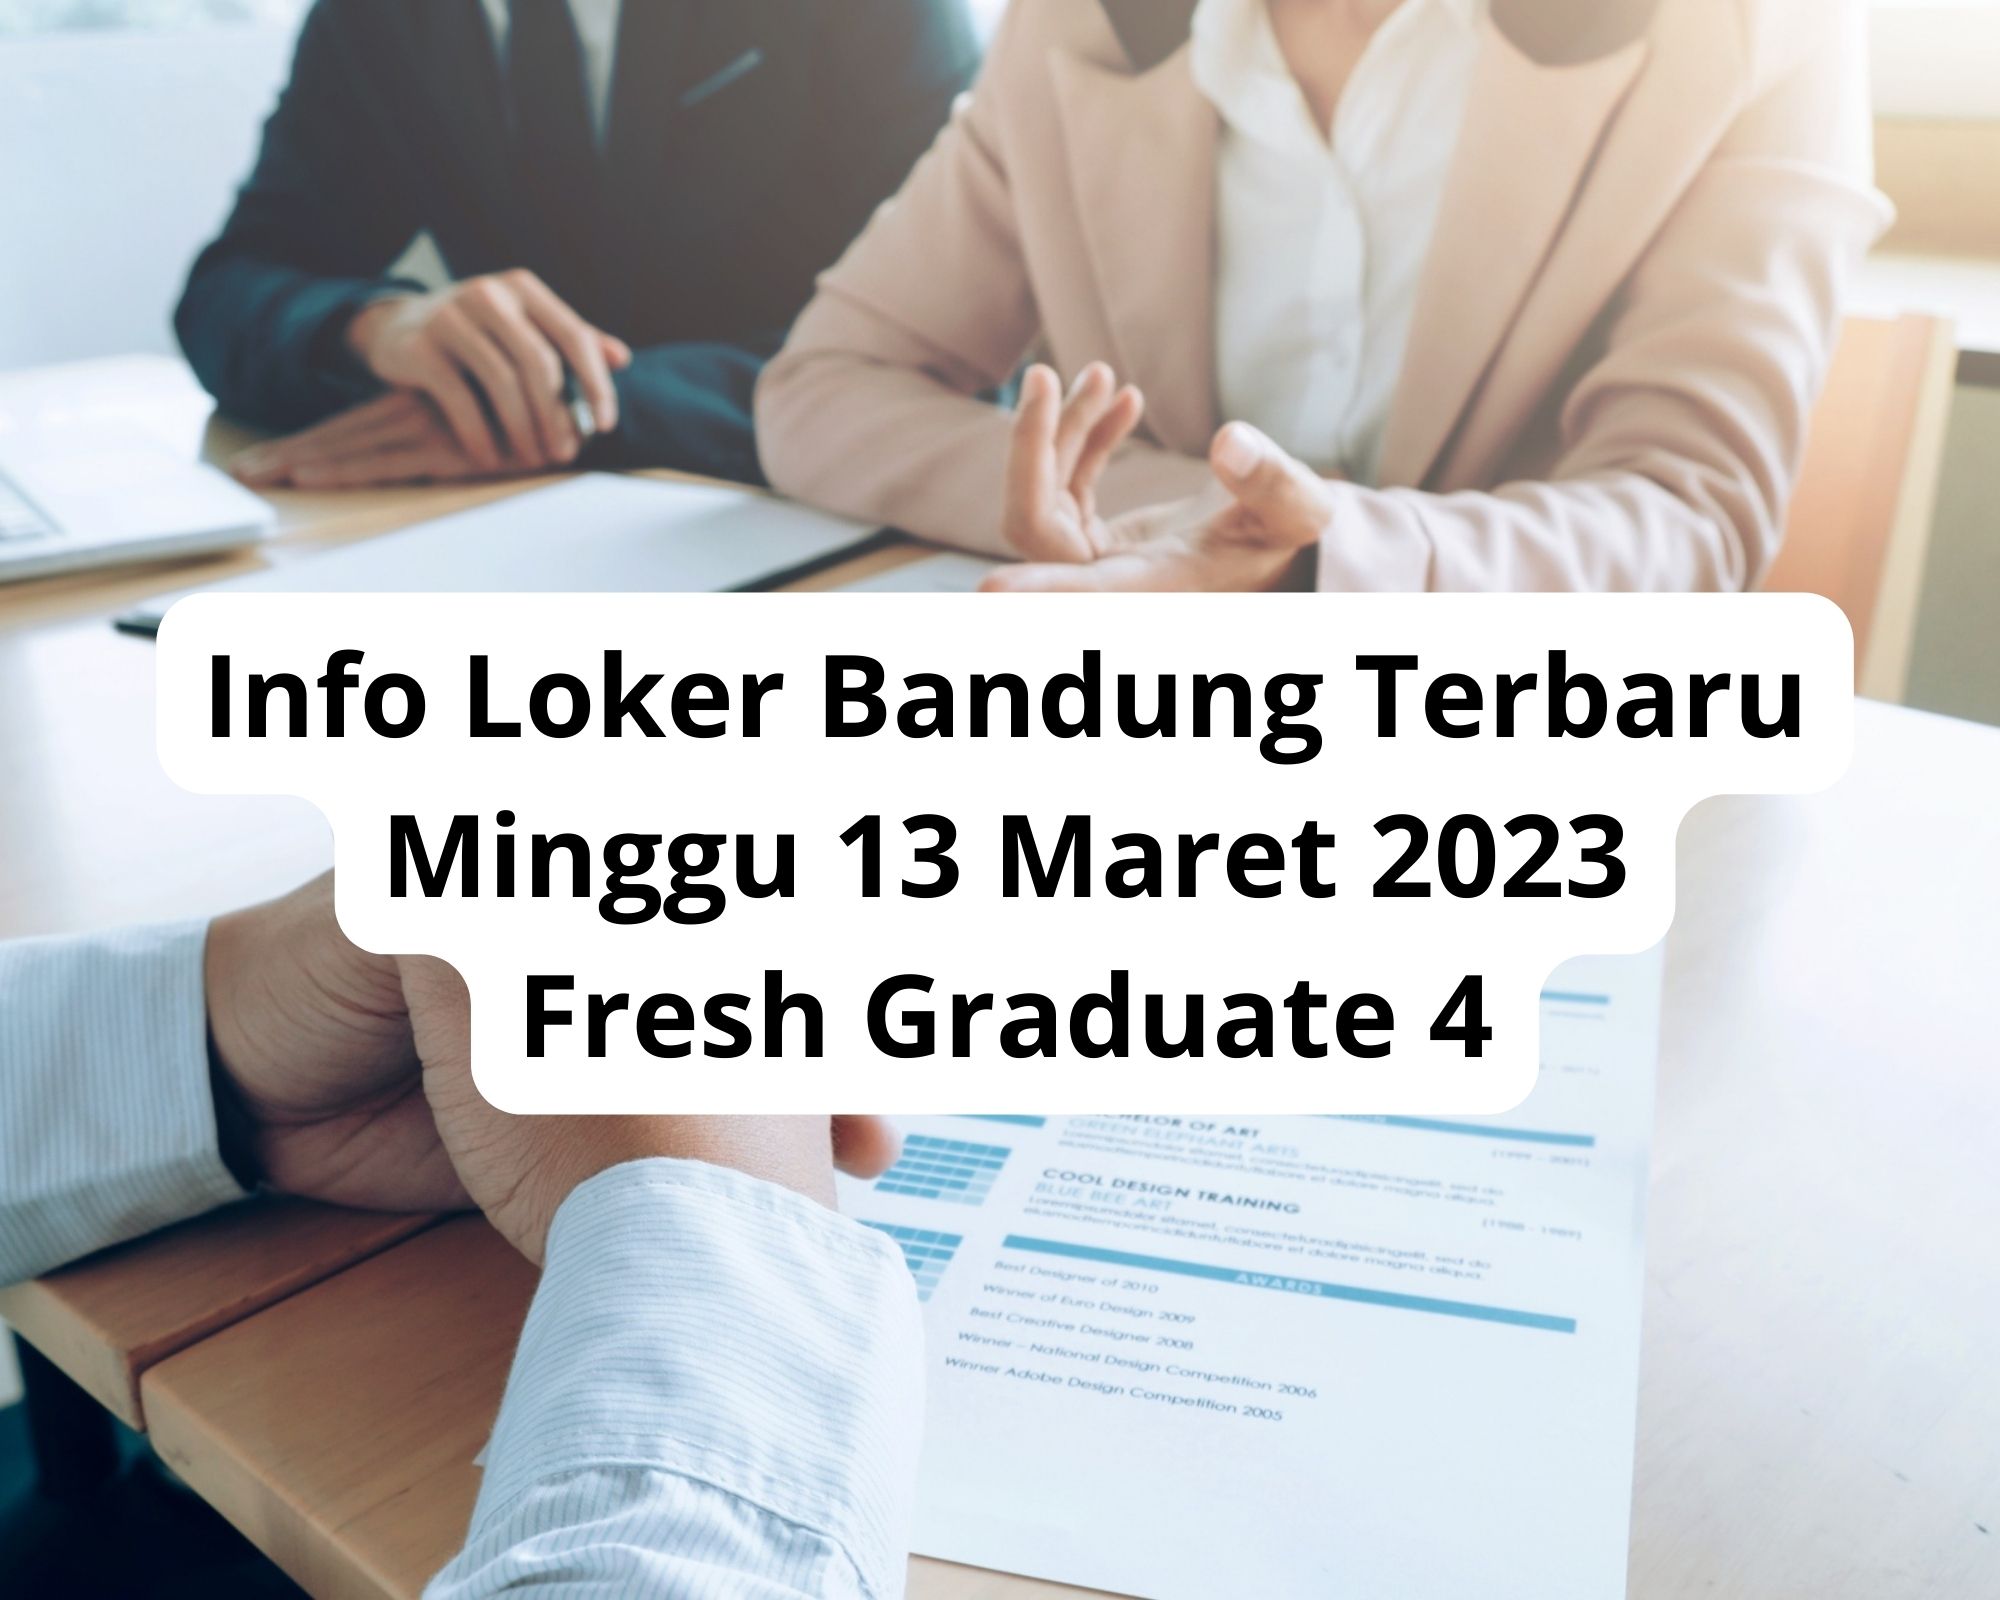 Info Loker Bandung Terbaru Senin 13 Maret 2023 Freshgraduate 4